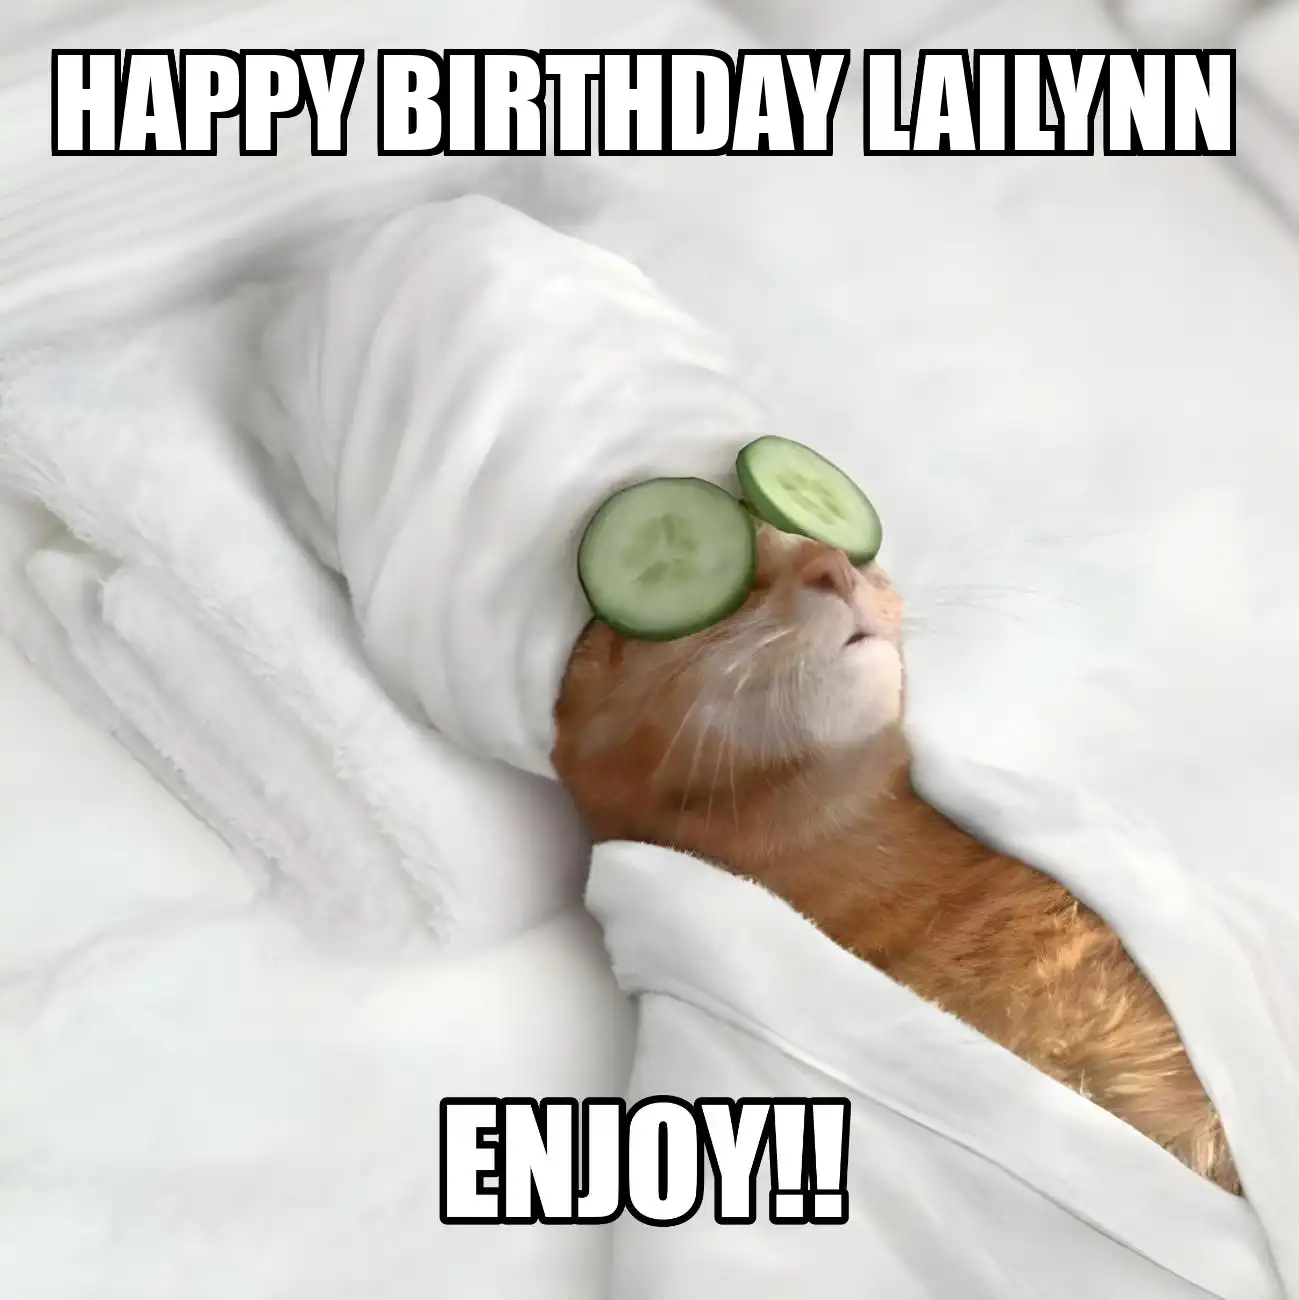 Happy Birthday Lailynn Enjoy Cat Meme